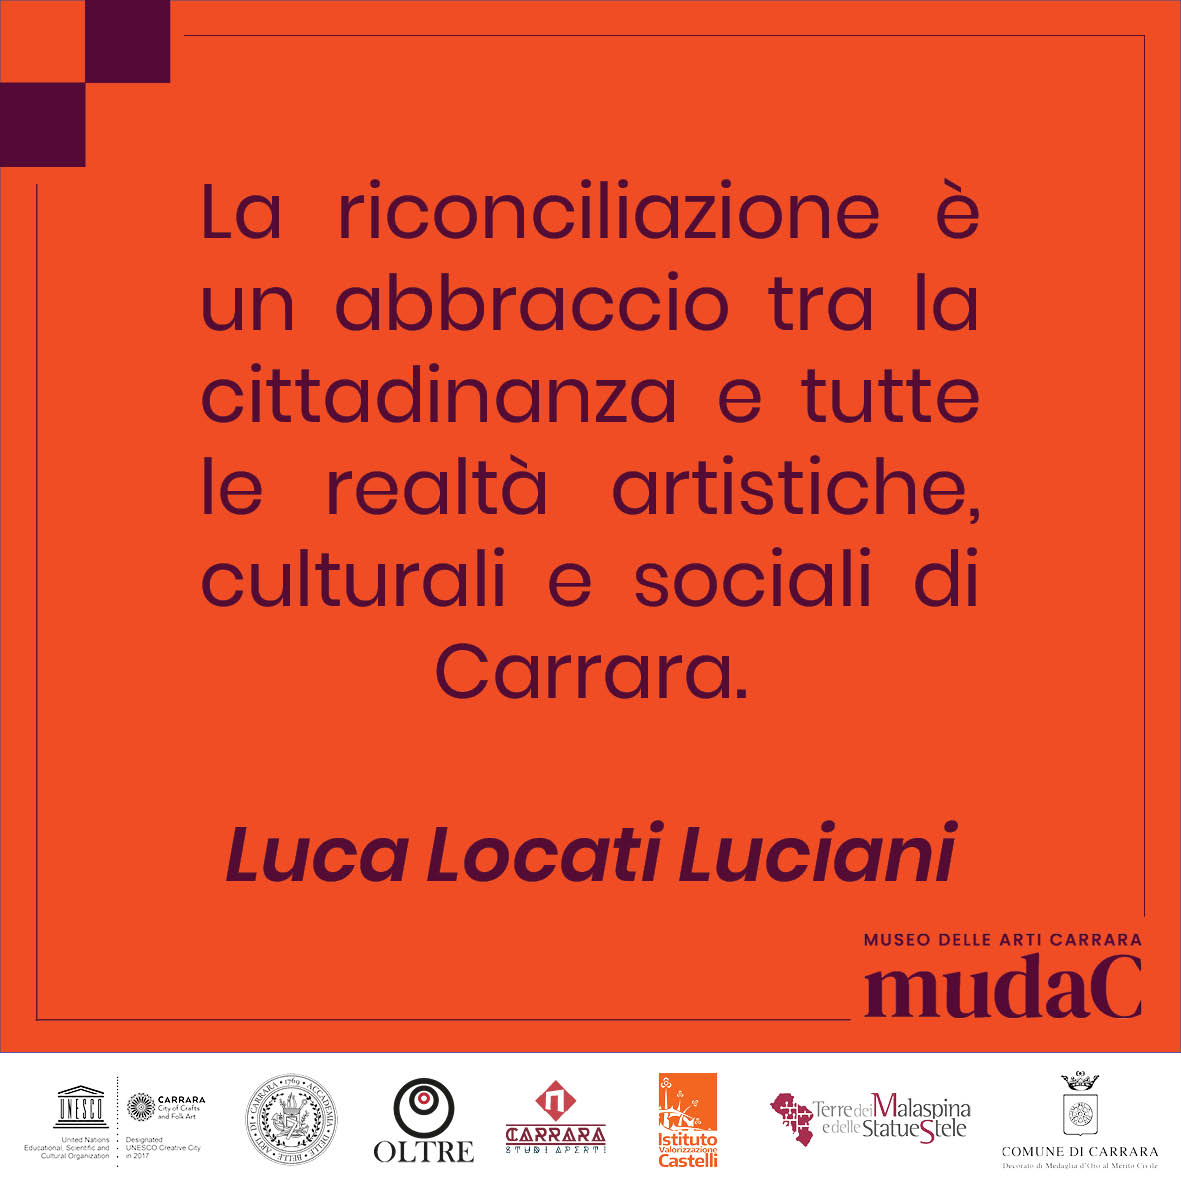 Luca Locati Luciani